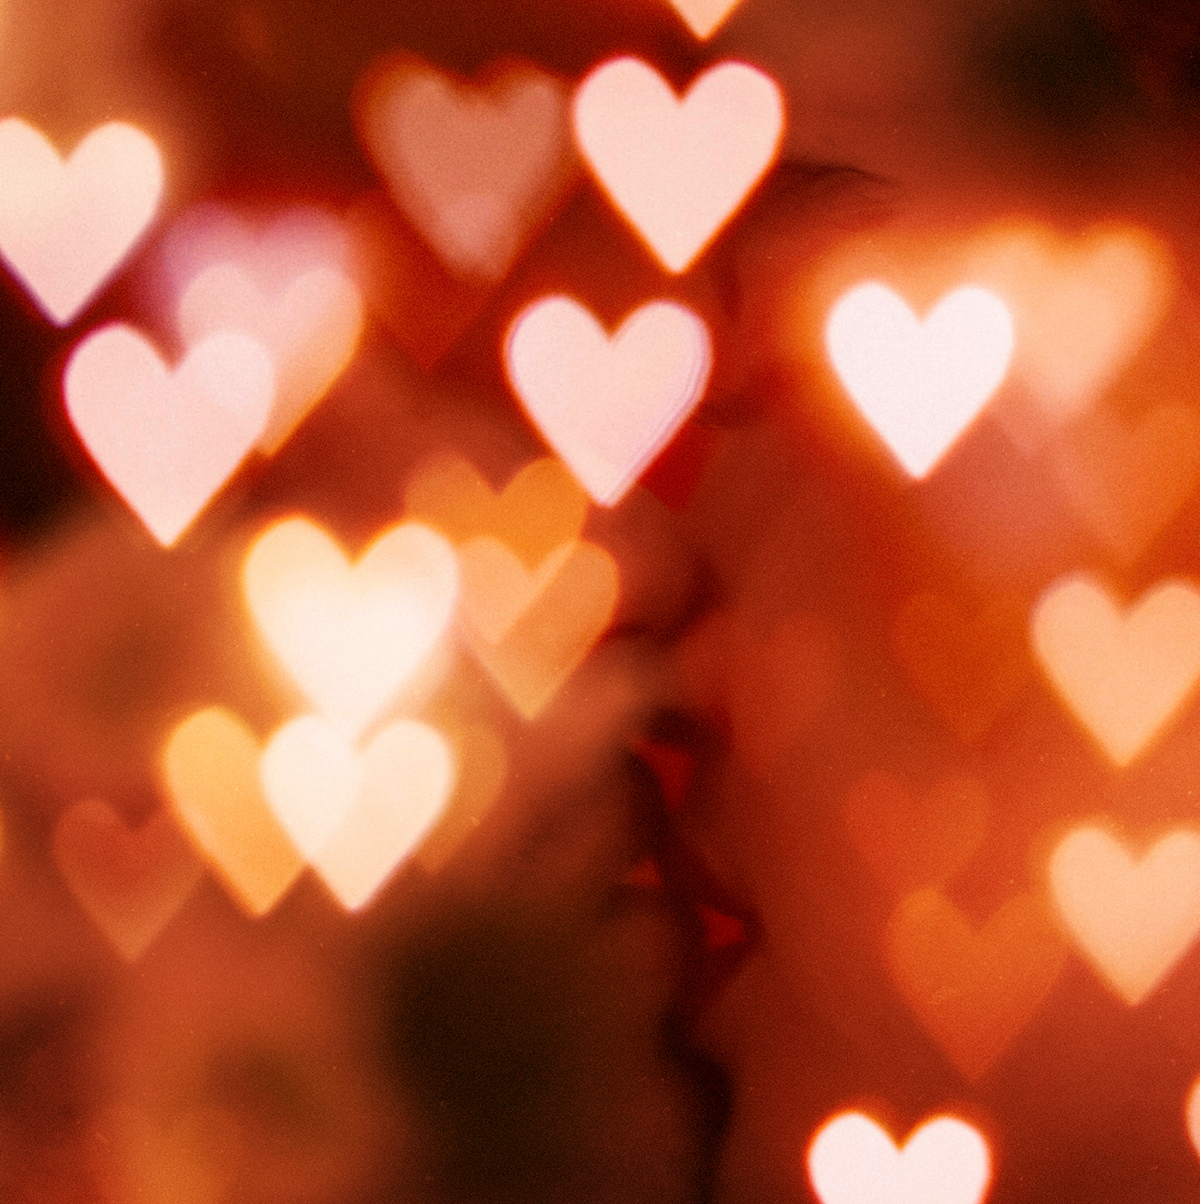 40 Cute Valentine's Day Date Ideas - Romantic Valentine's Plans